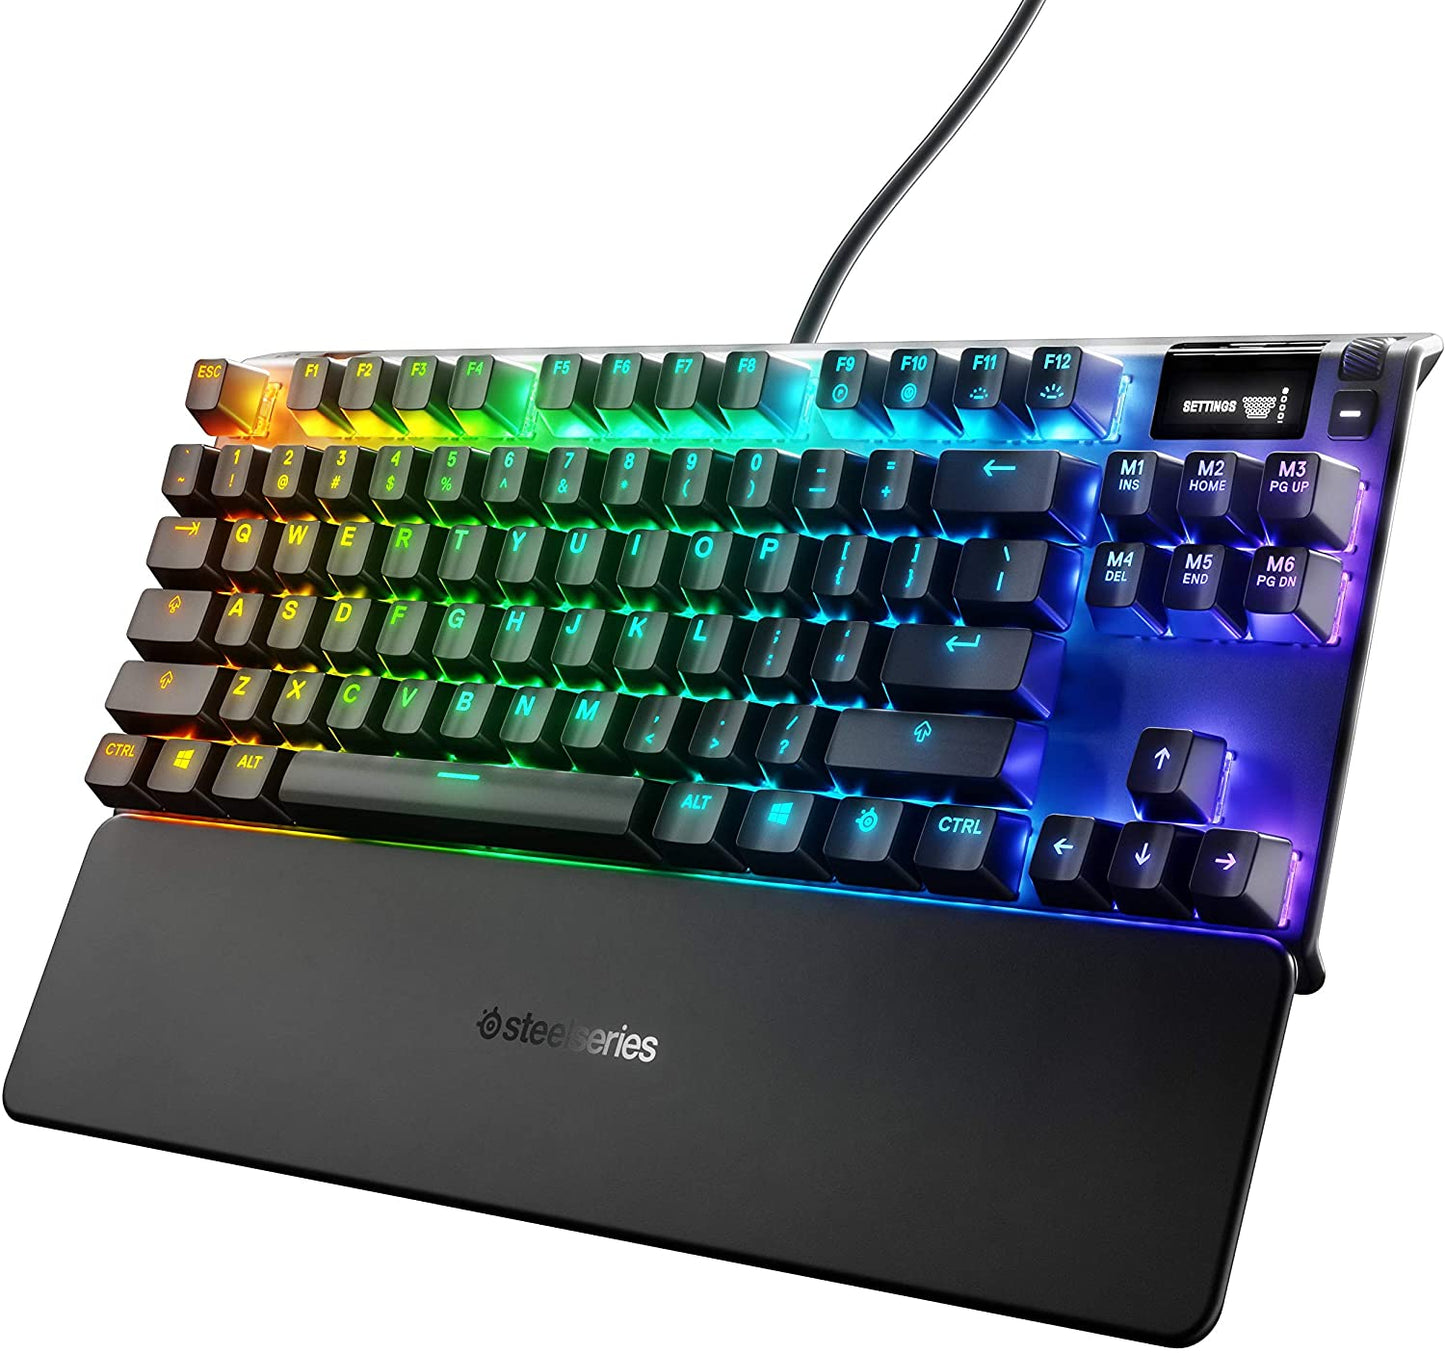 Steelseries Apex 7 Tkl Compact Mechanical Gaming Keyboard – Oled Smart Display – Usb